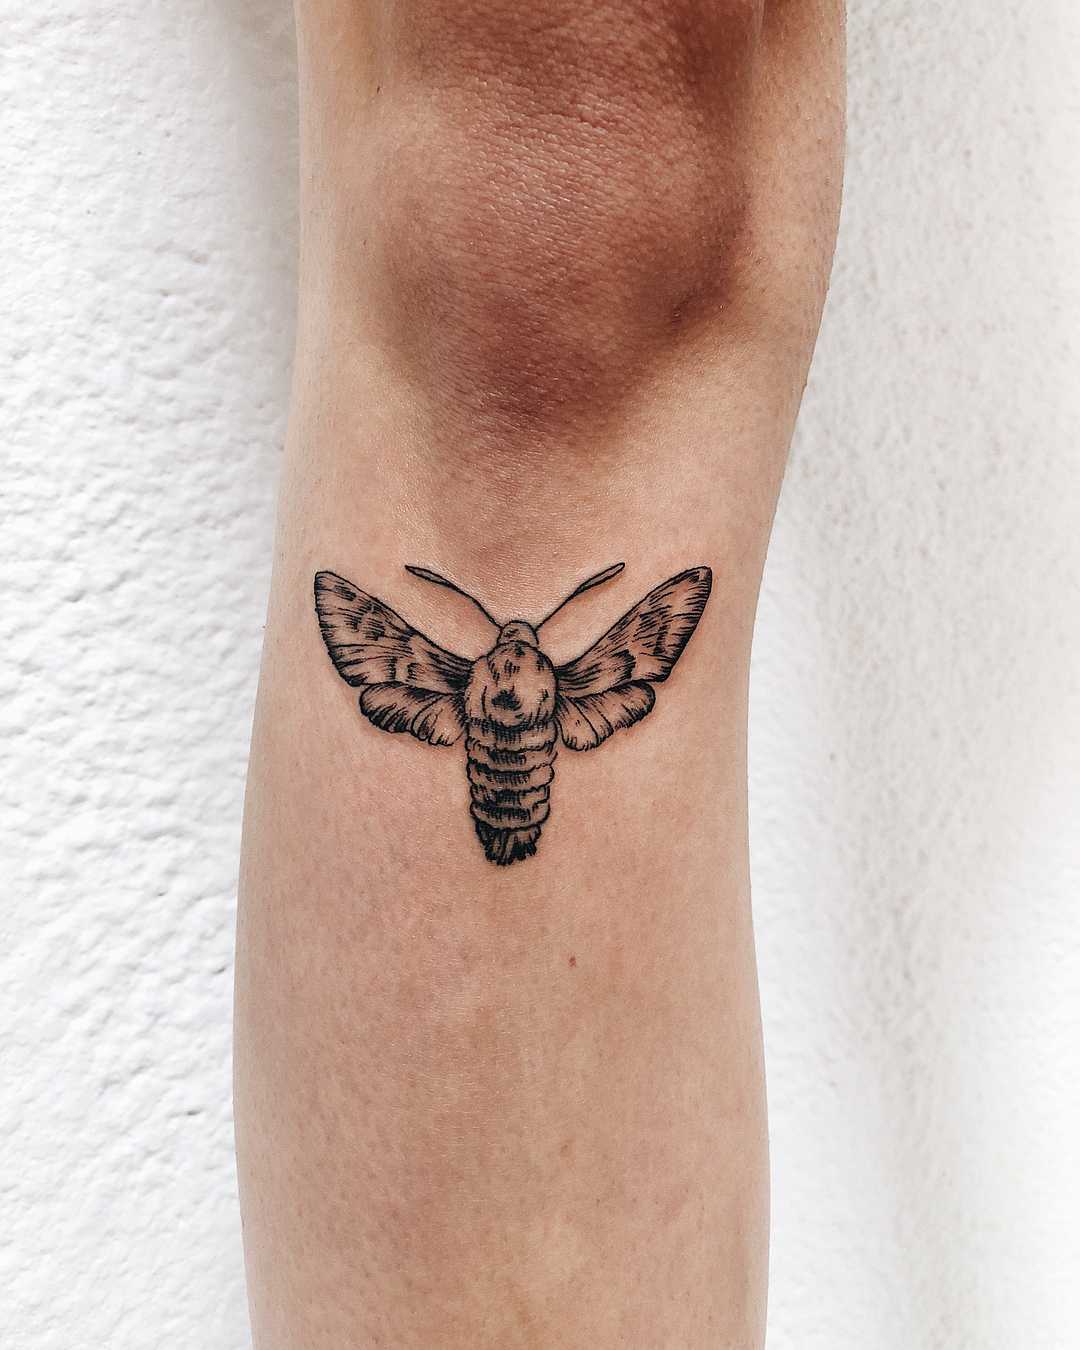 Moth tattoo by Finley Jordan